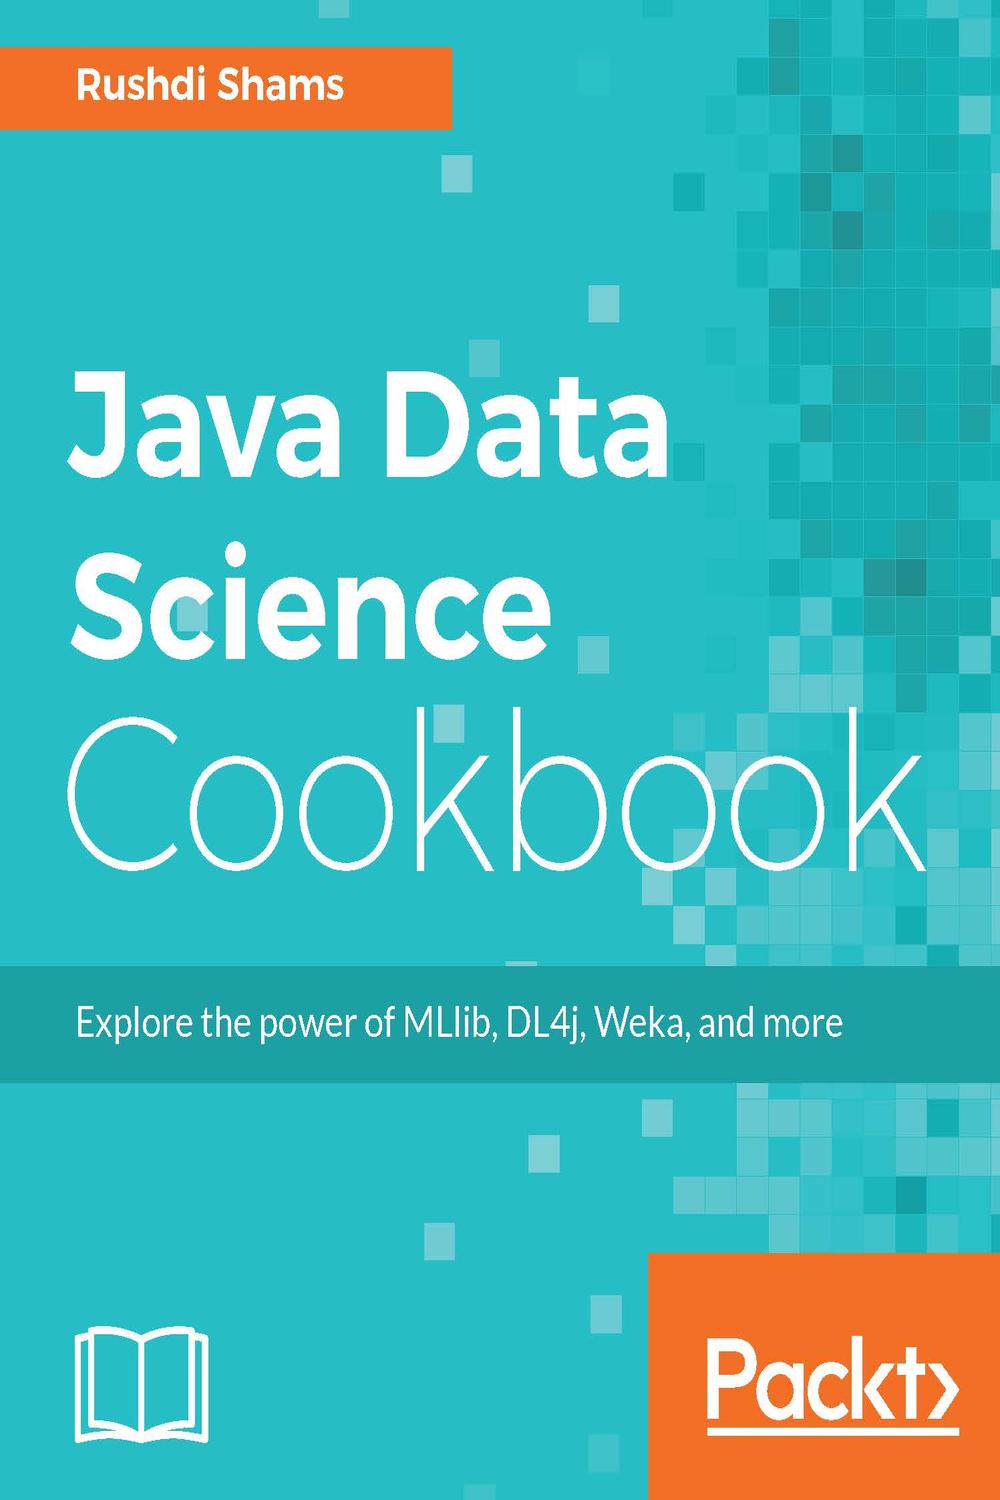 Java Data Science Cookbook - Rushdi Shams